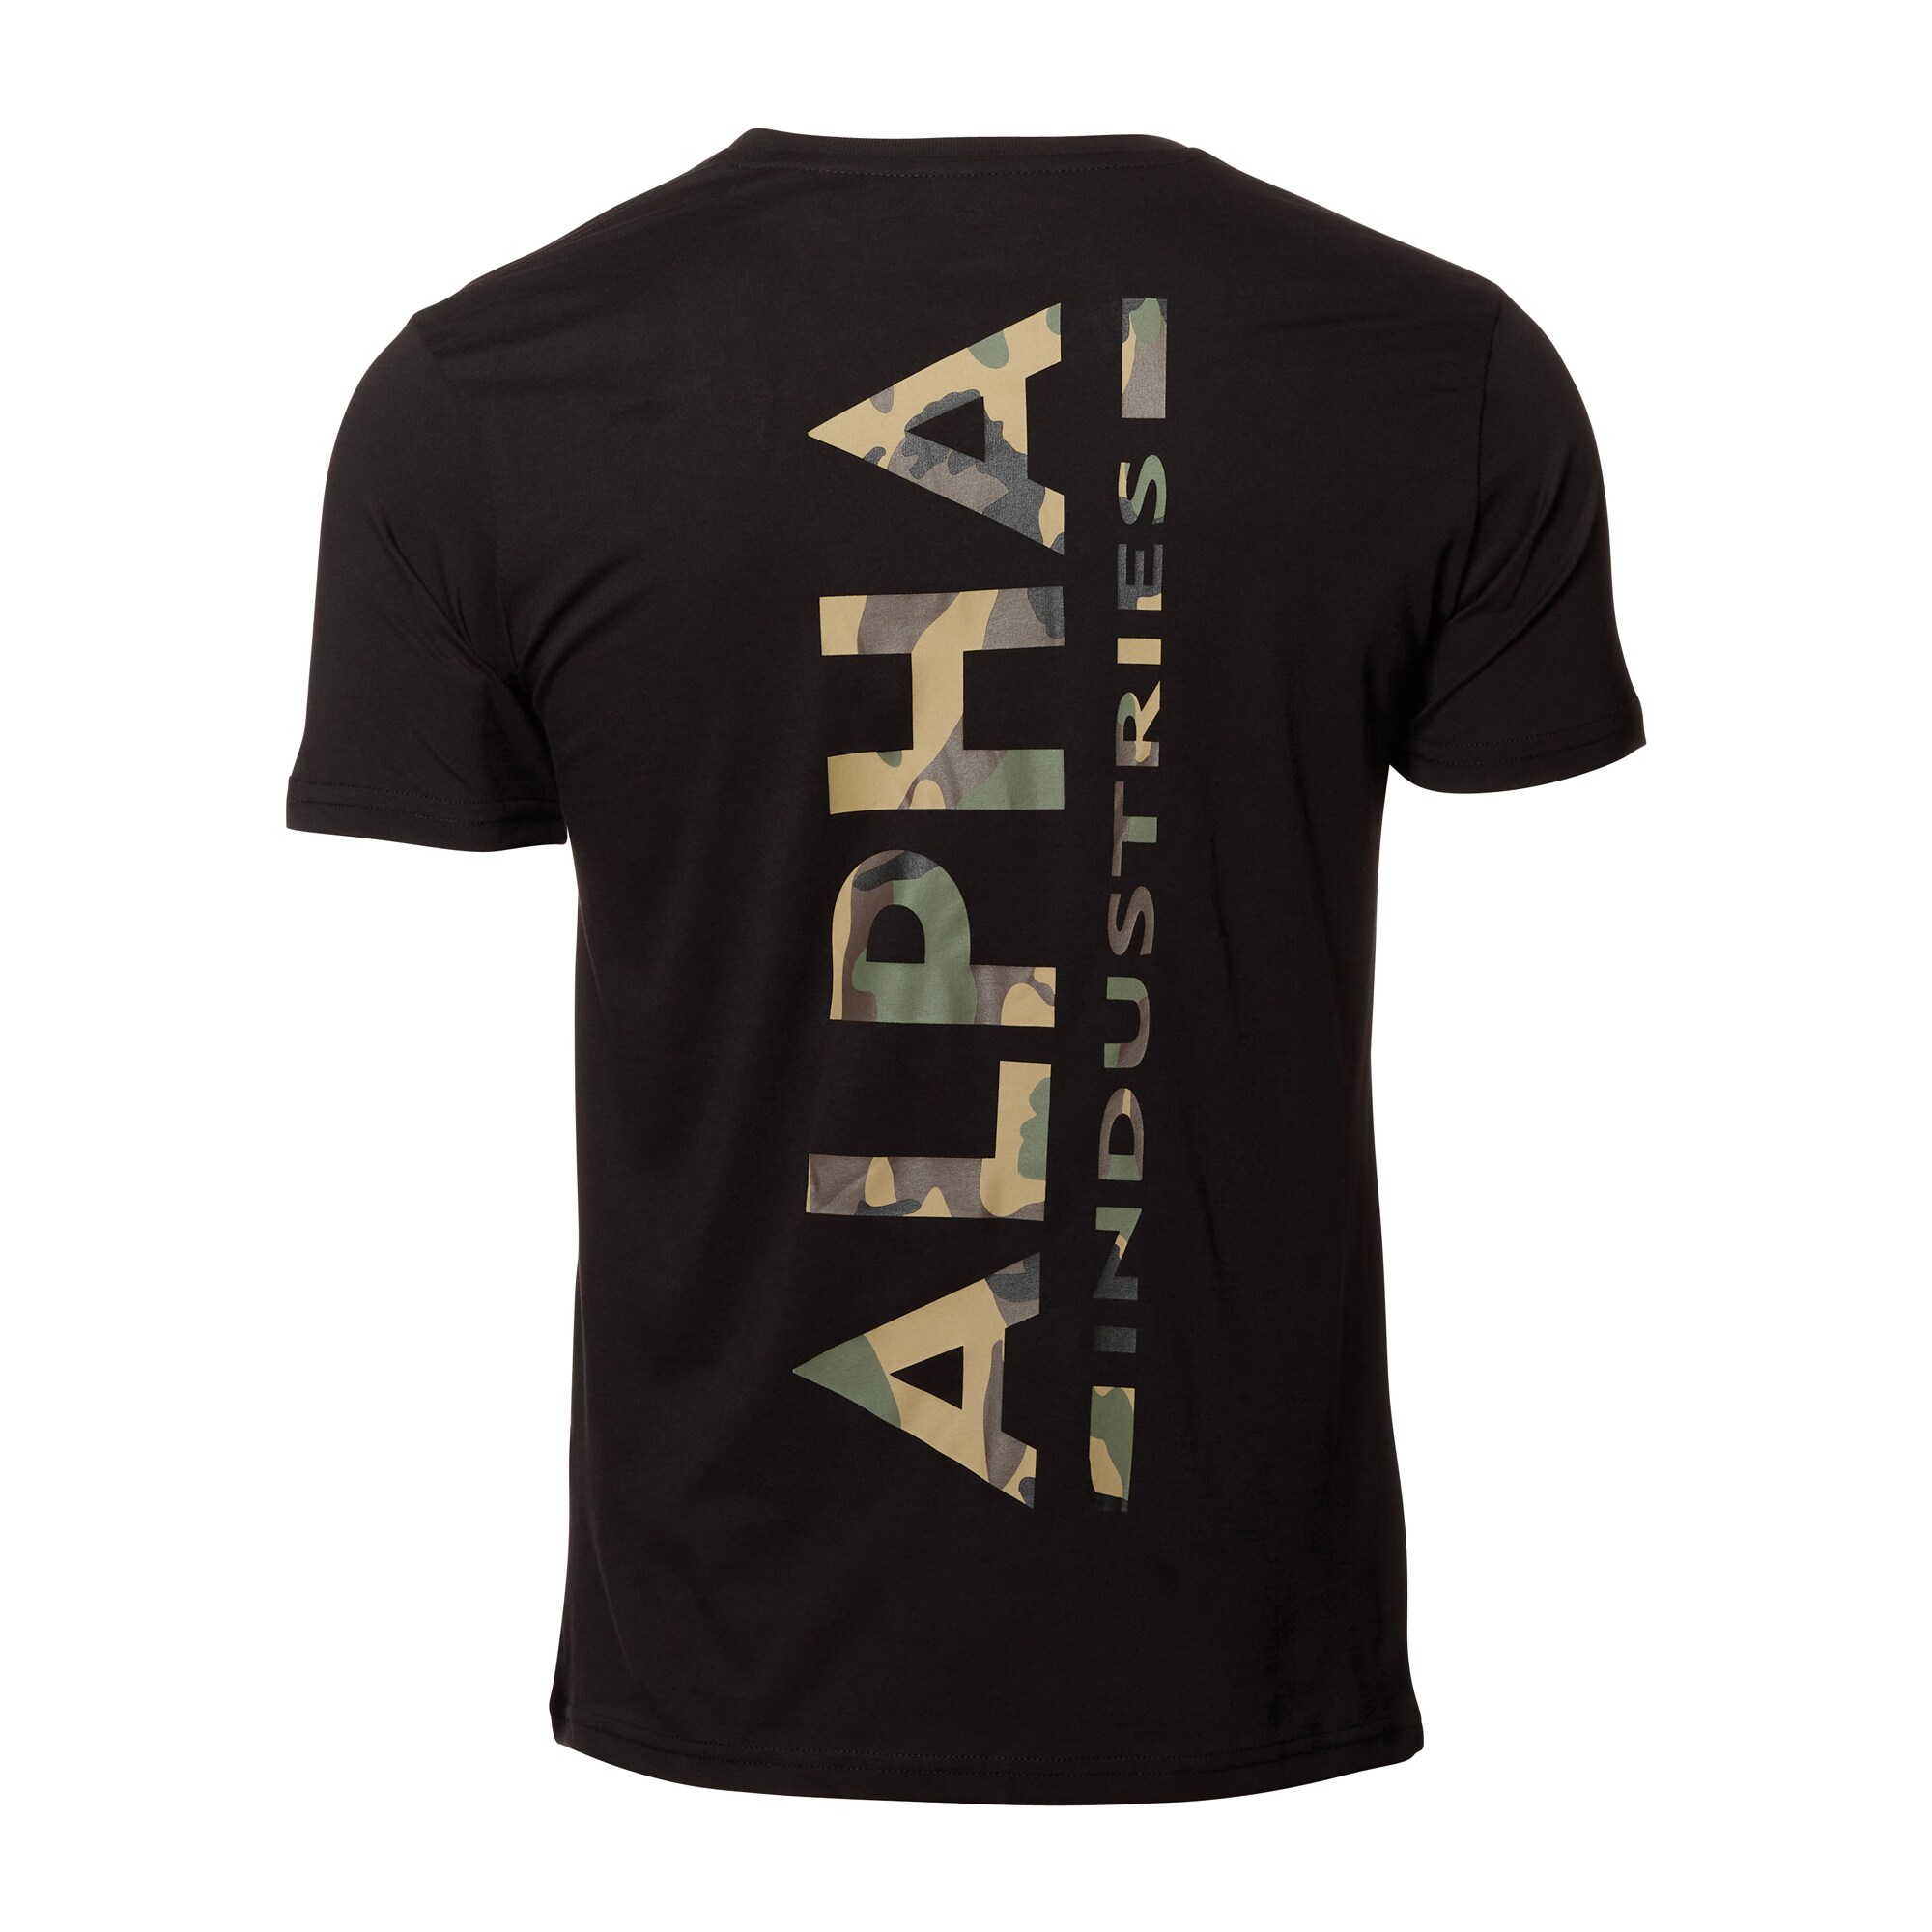 Purchase the Alpha Industries T-Shirt Backprint Print black wood